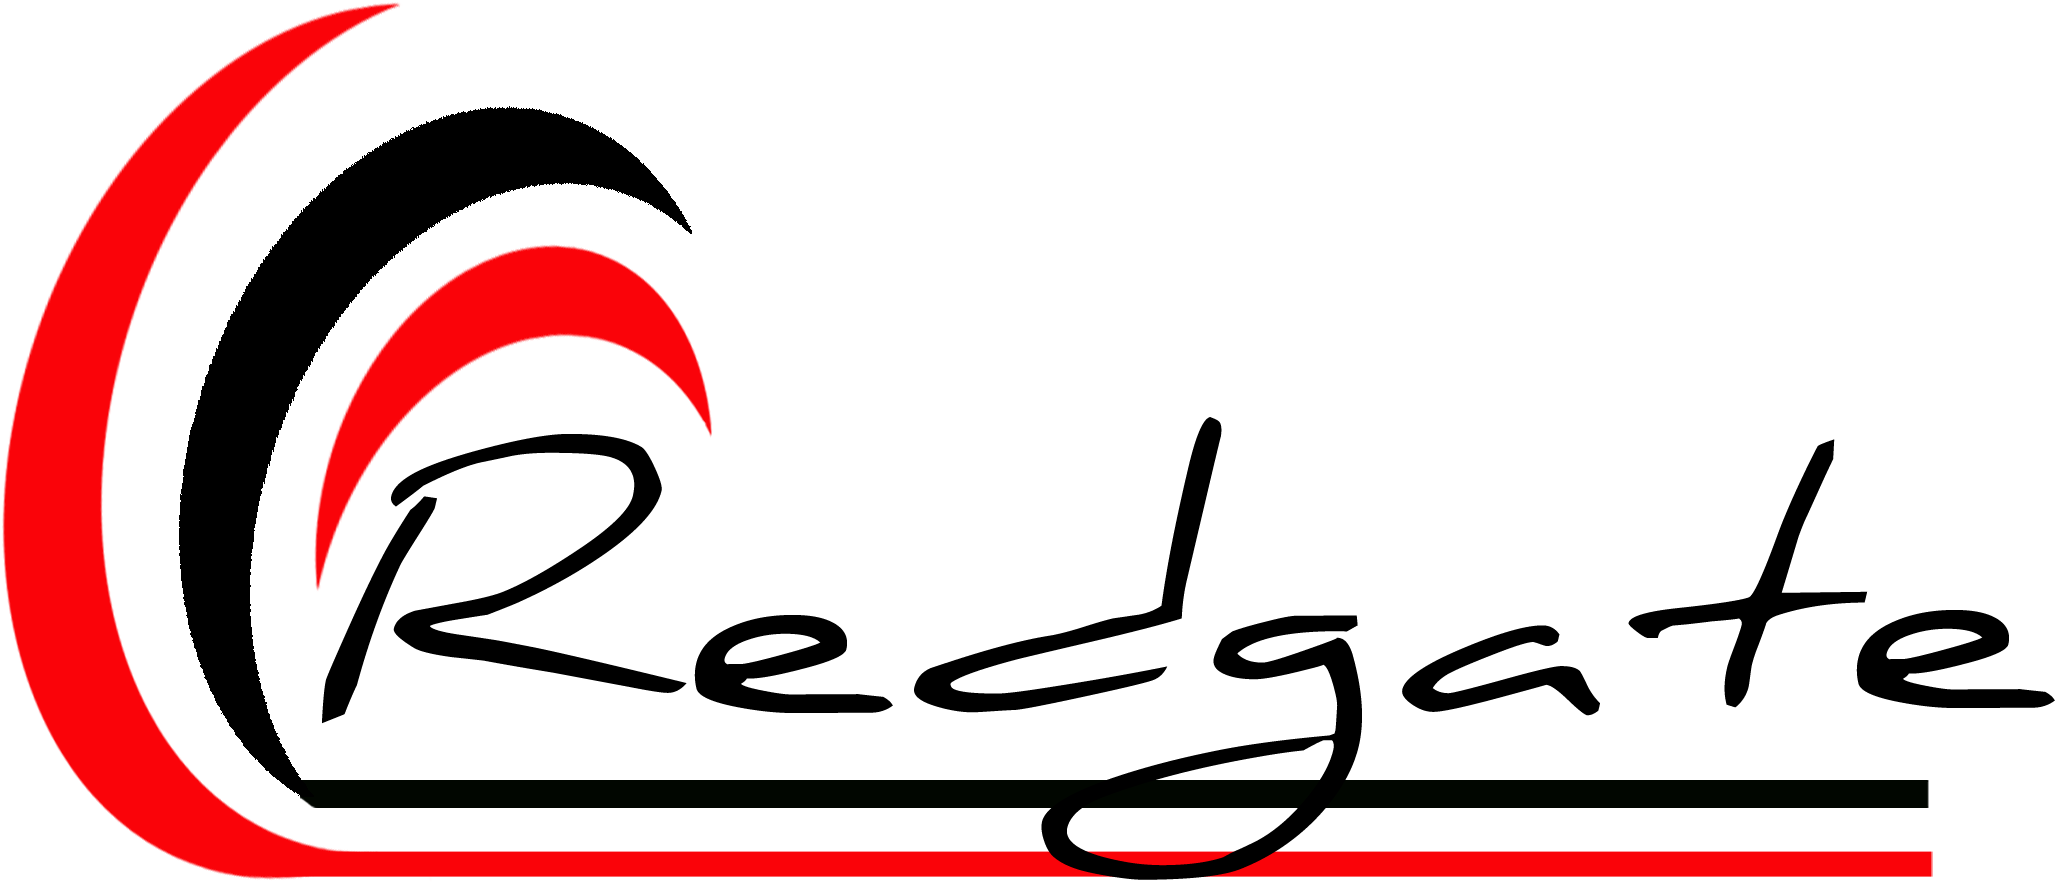 Arlington Property Logo - Arlington (2168x1005)